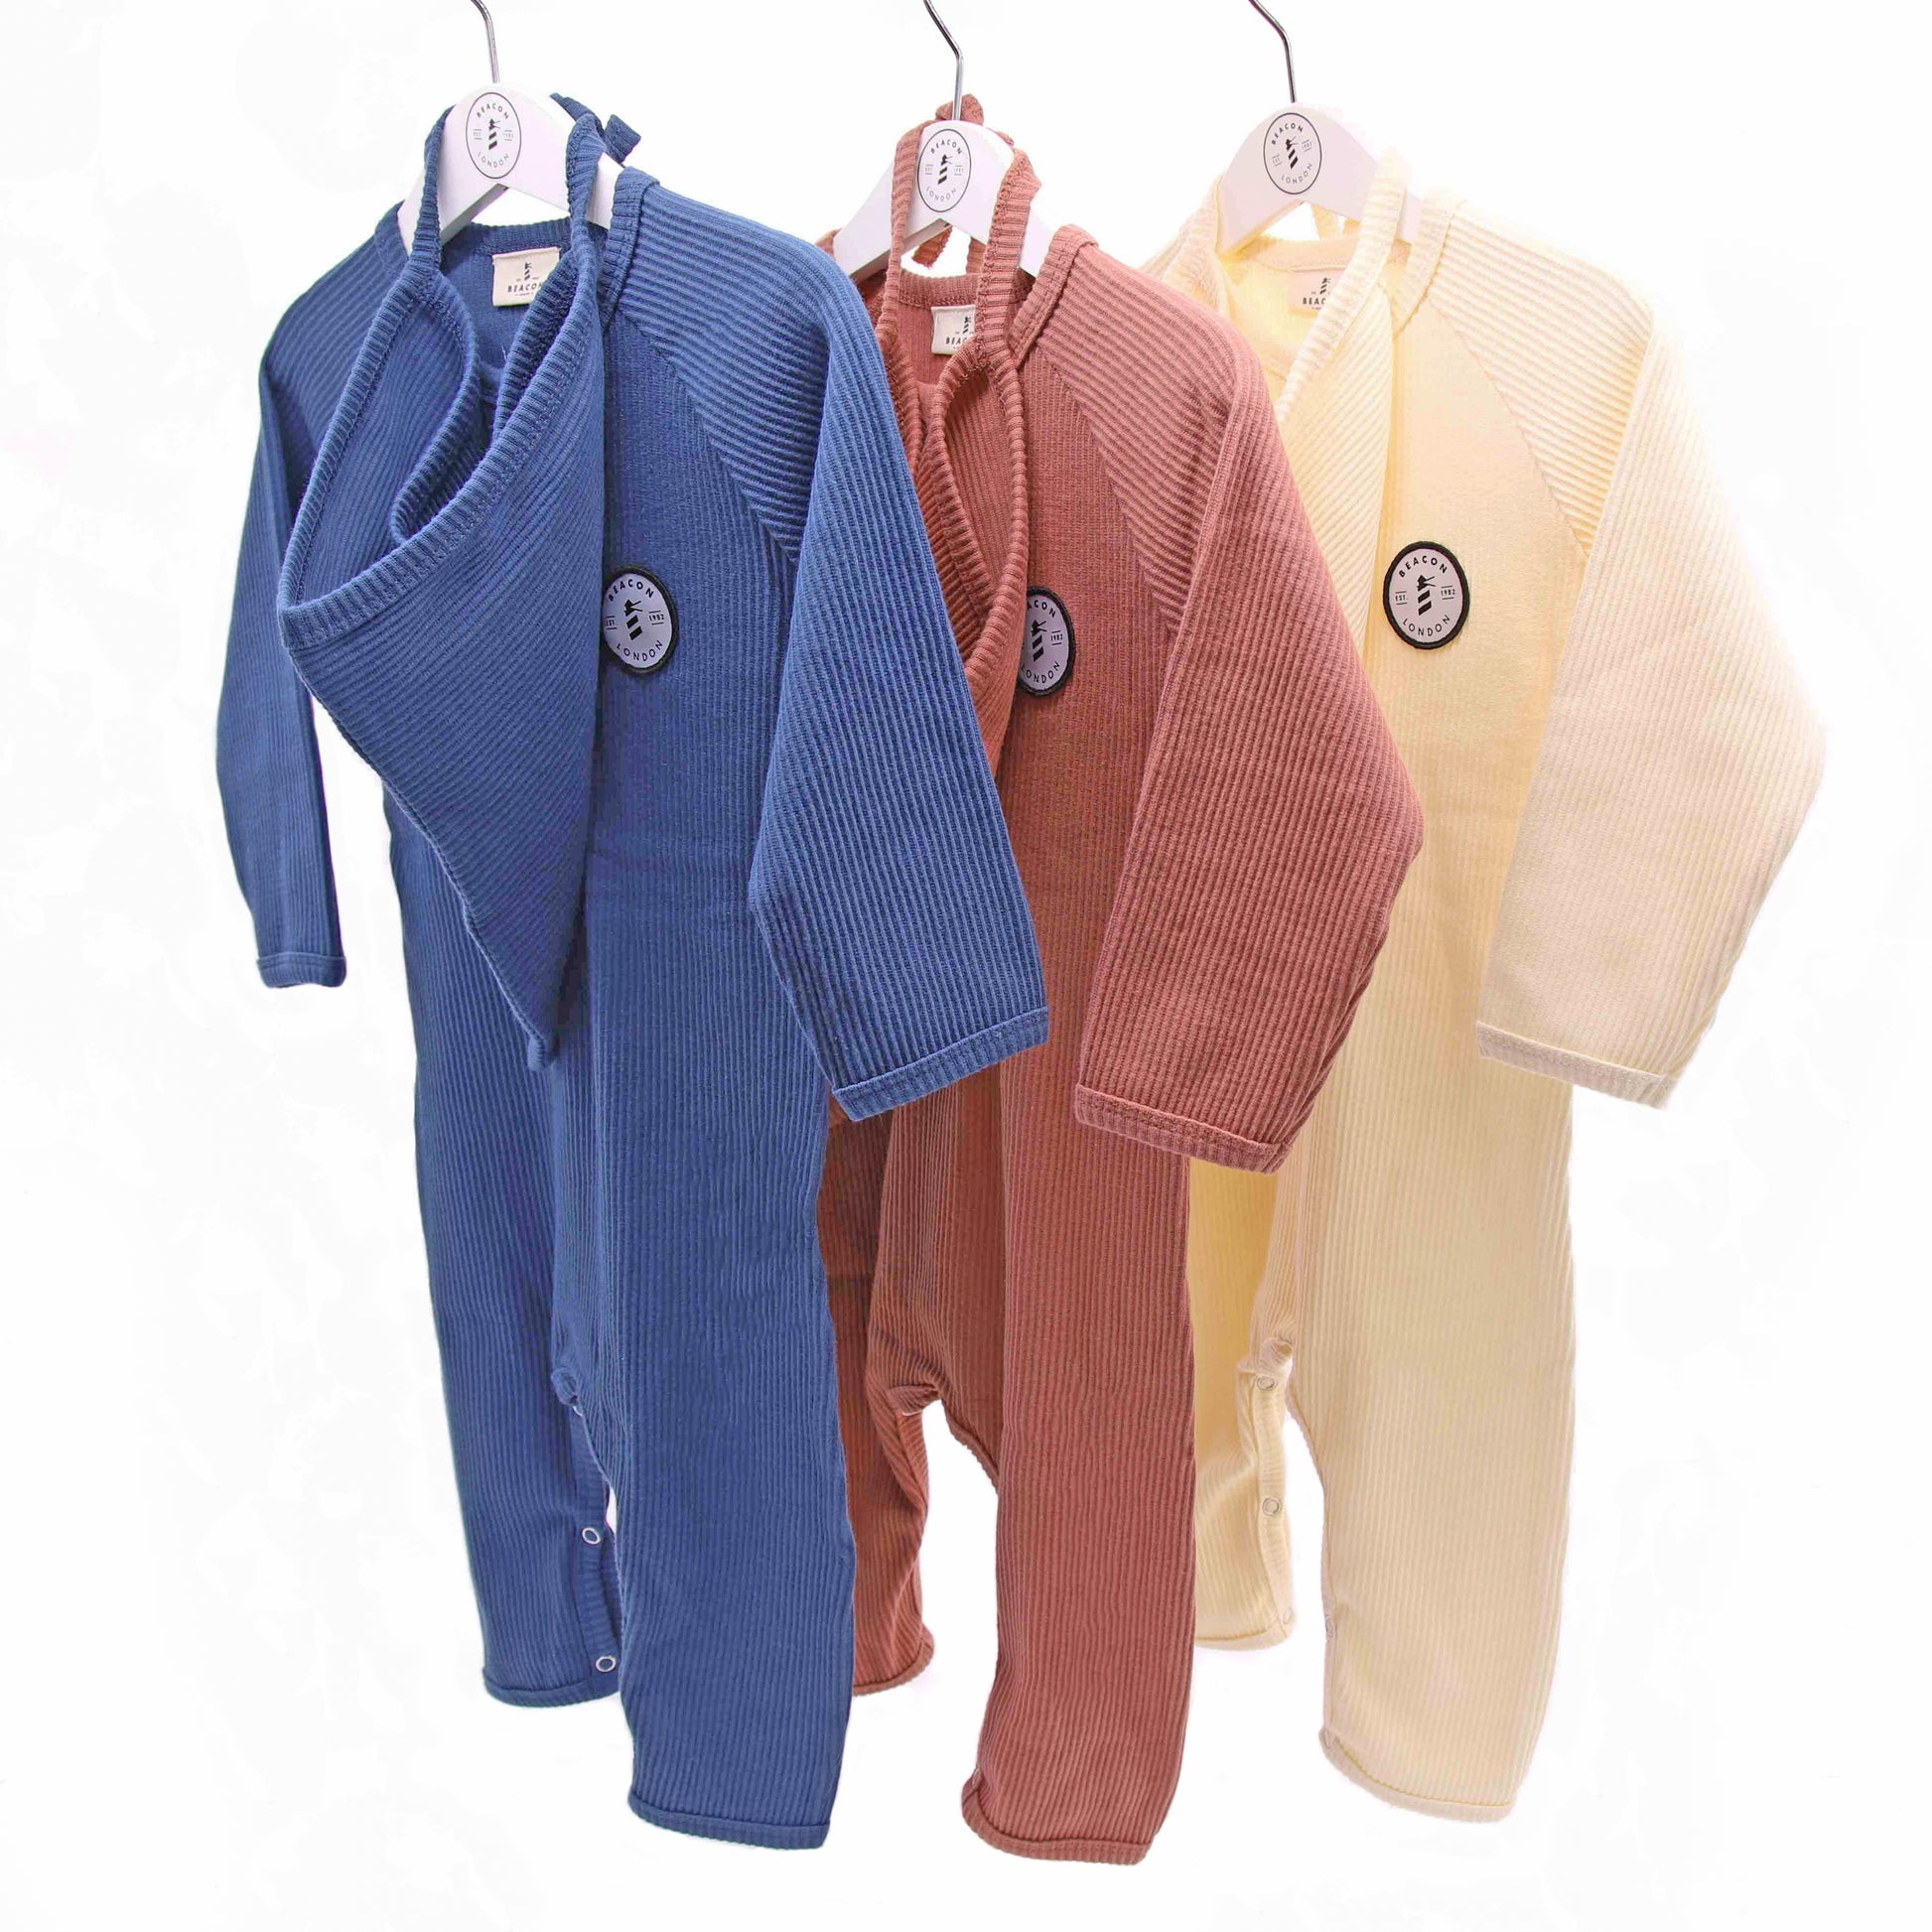 Full Length Romper Suit & Bonnet-Clothing-Beacon London-3-6 Months-Cream-Beacon London